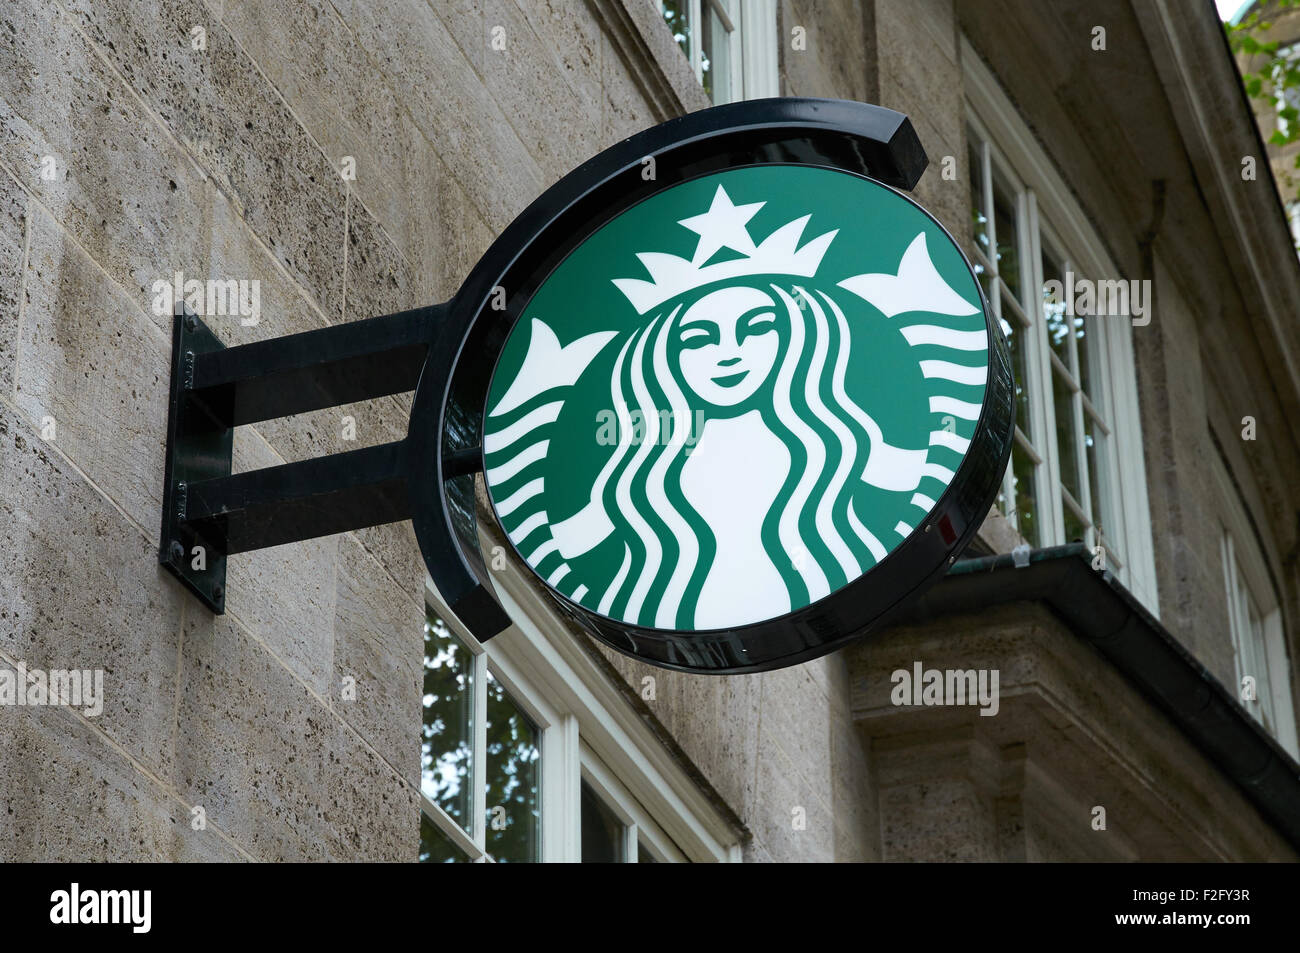 HAMBURG, GERMANY - AUGUST 14, 2015: Starbucks Coffee logo light box, Starbucks is the largest coffeehouse company in the world Stock Photo